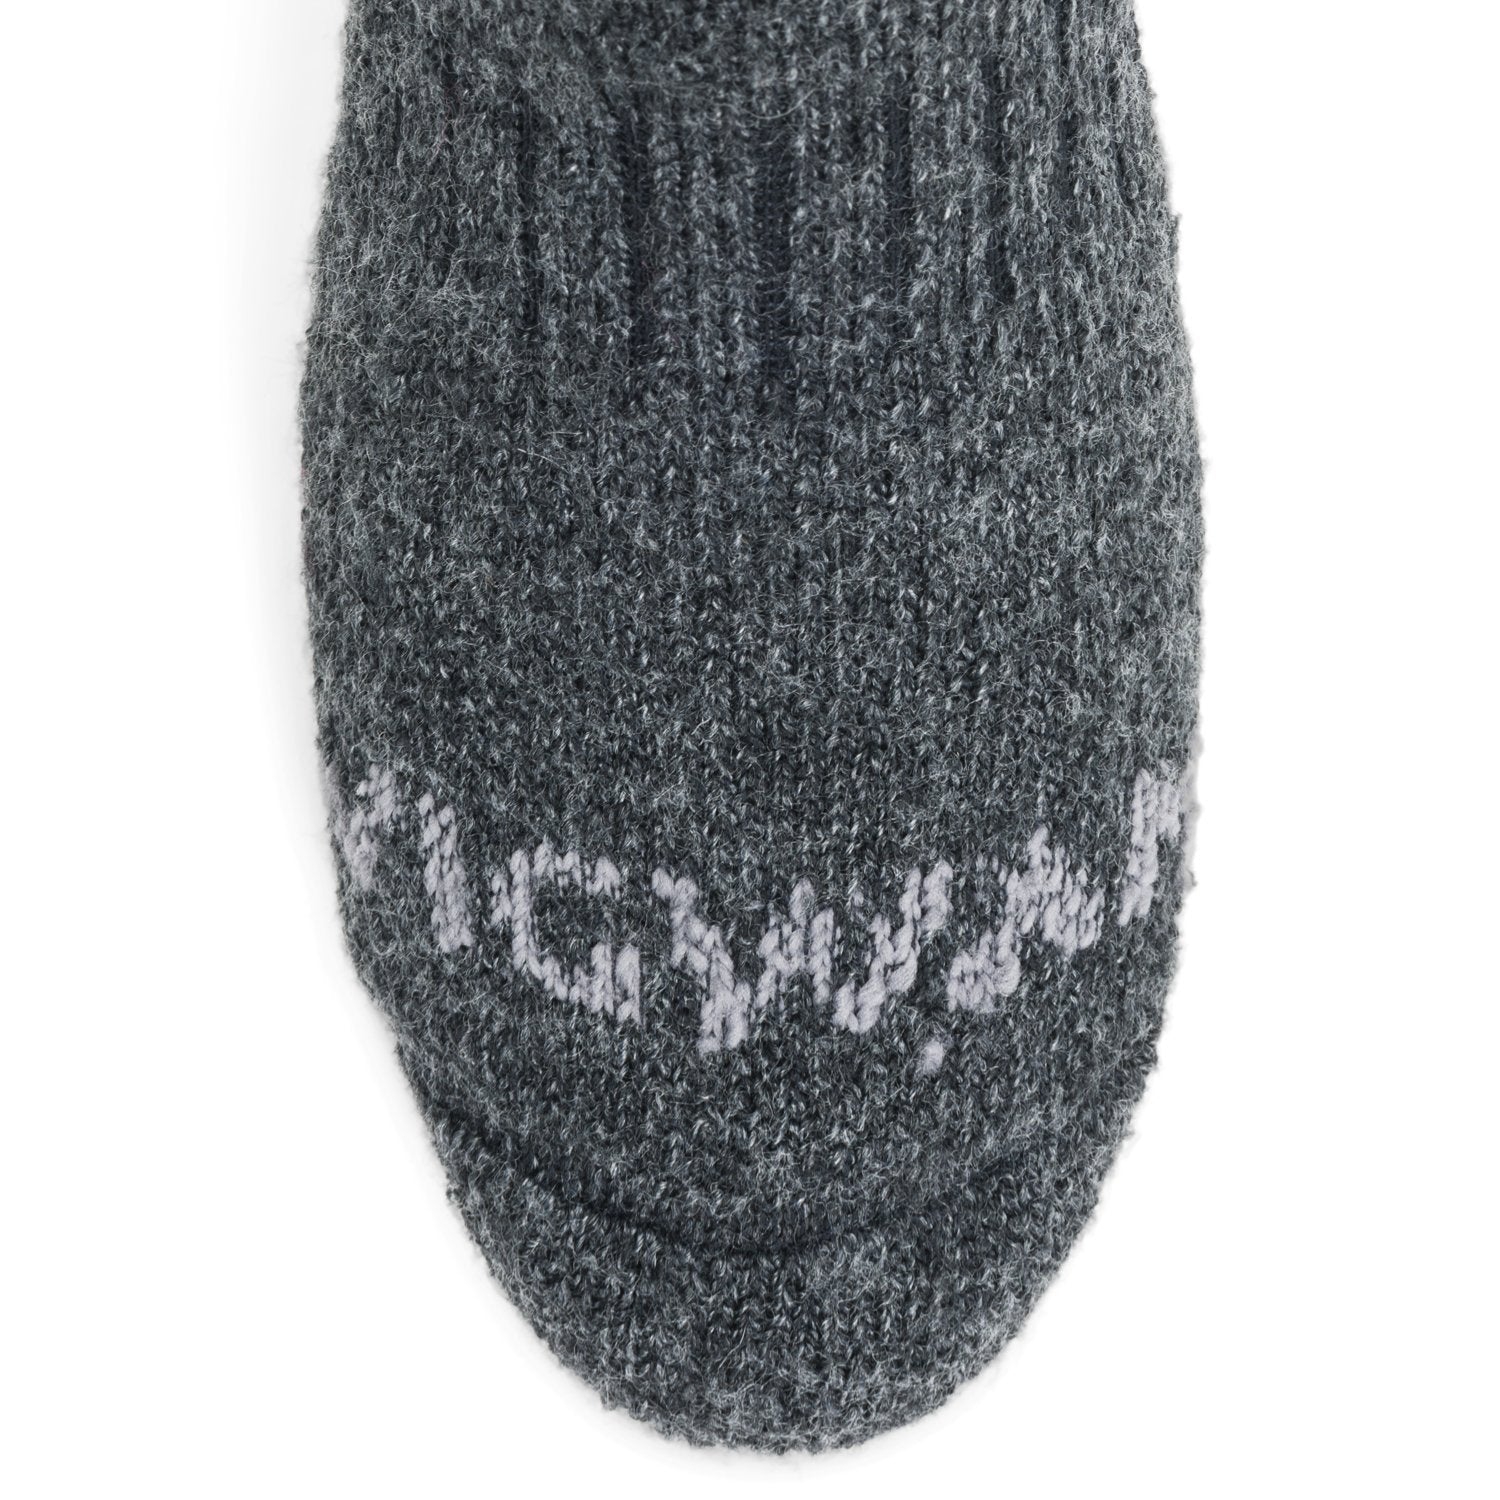 40 Below II Wool Heavyweight Sock - Black toe perspective - made in The USA Wigwam Socks